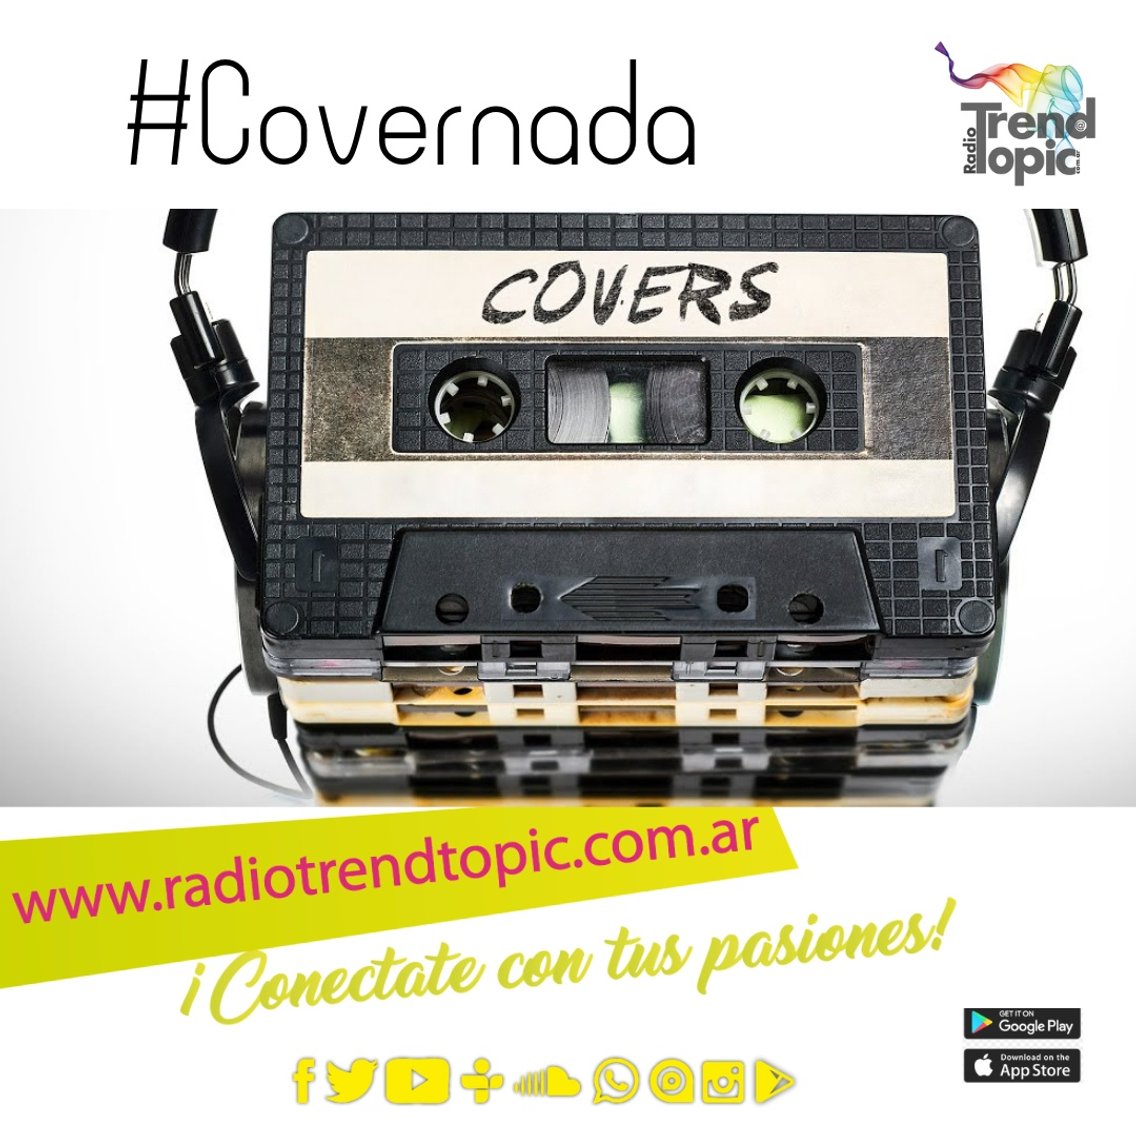 Covernada - Radio Trend Topic - Cover Image